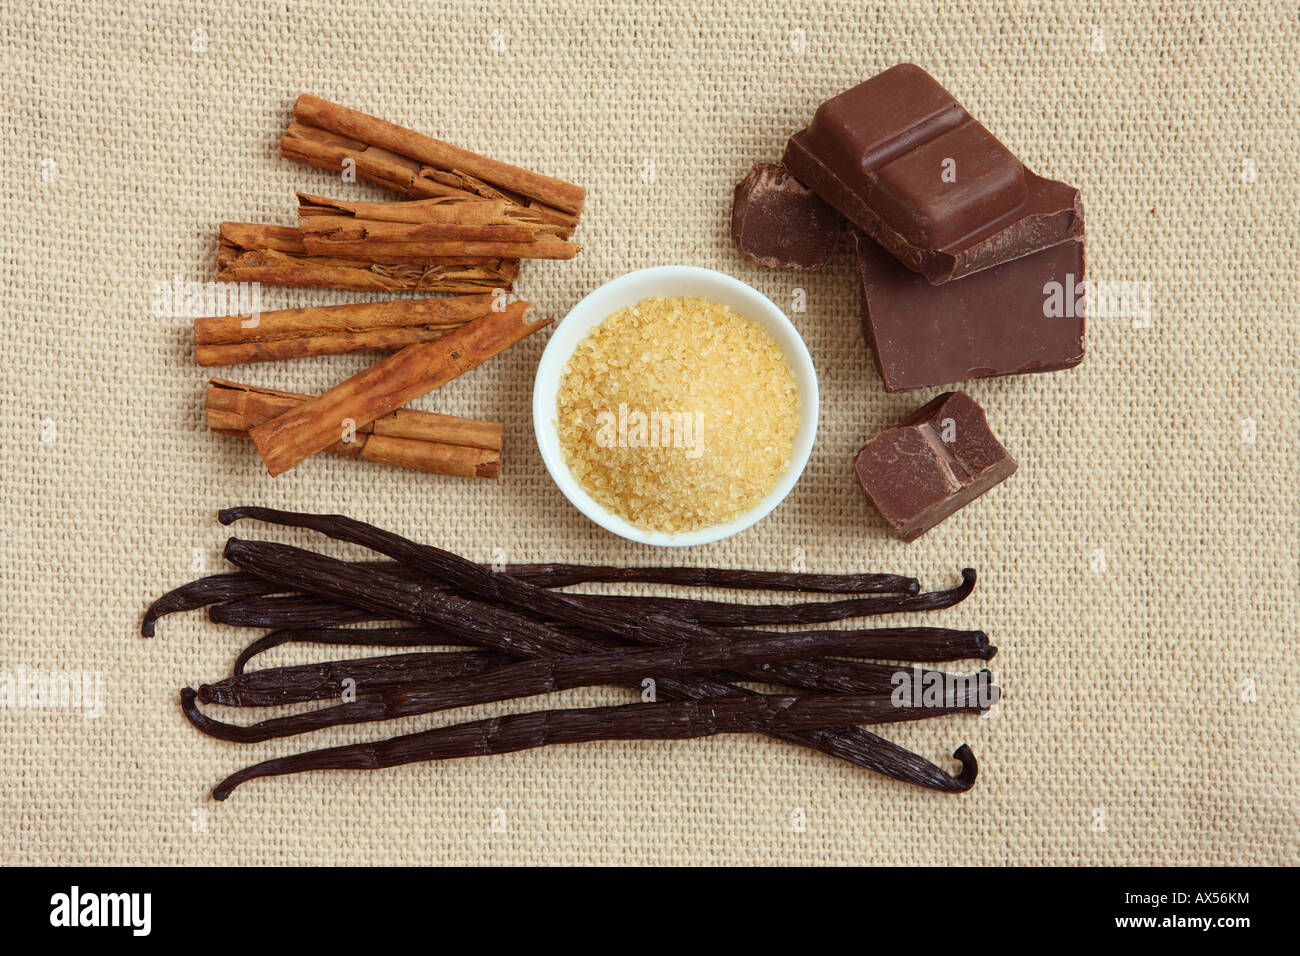 Natural Ingredients Cinnamon sticks Raw Sugar Milk Chocolate and Vanilla Pods Stock Photo